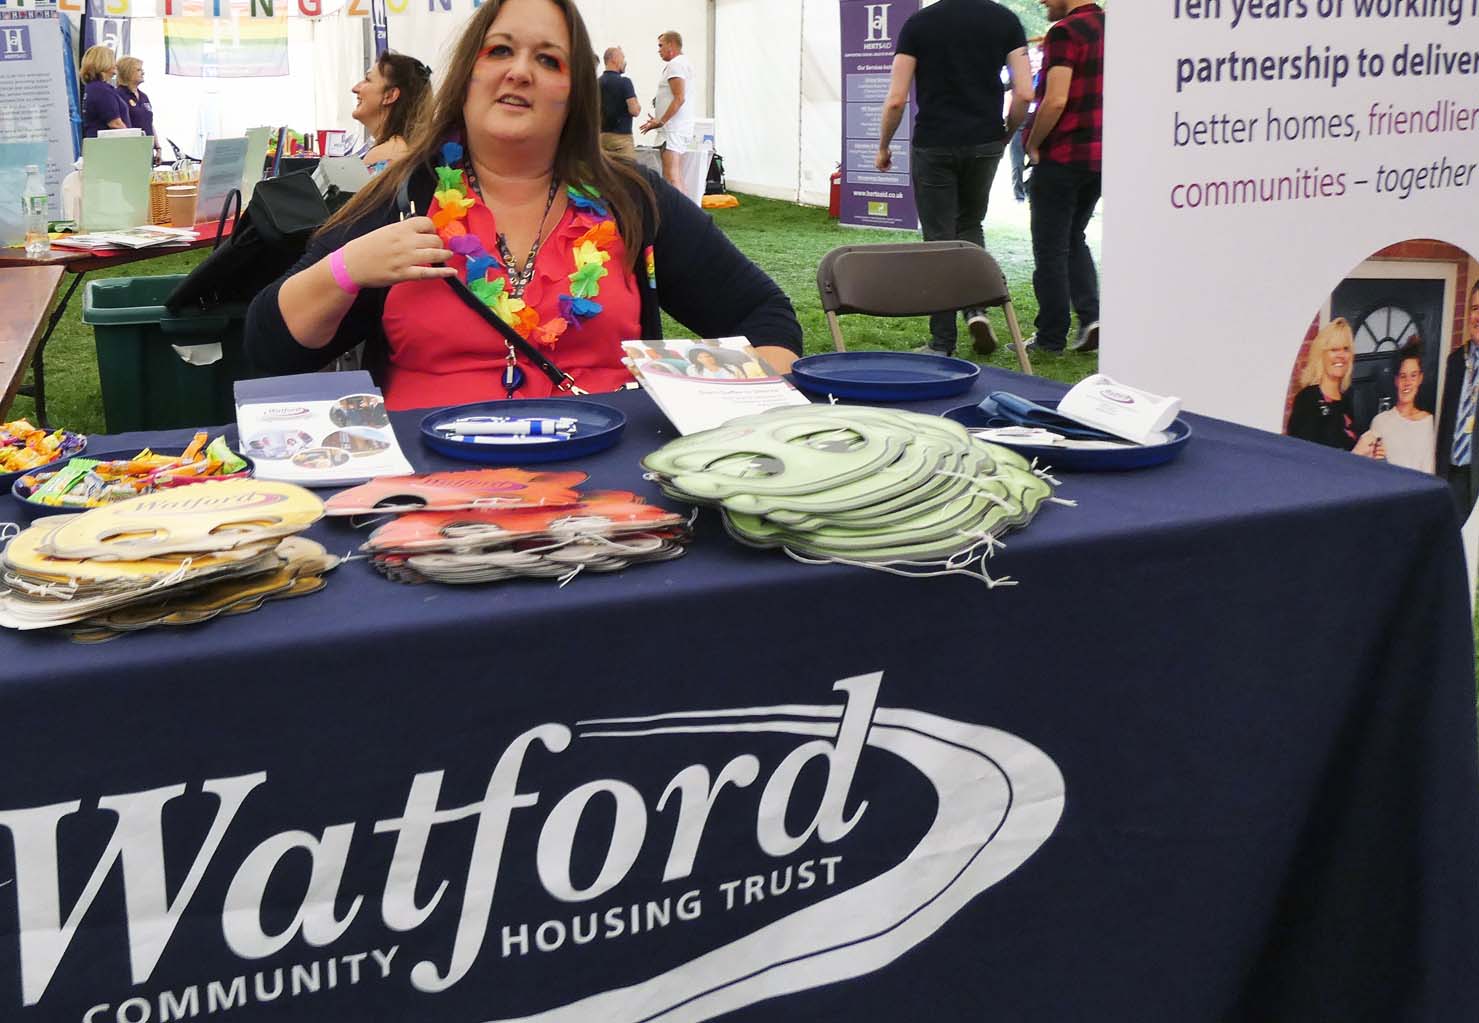 Amy - Watford Community Housing Trust